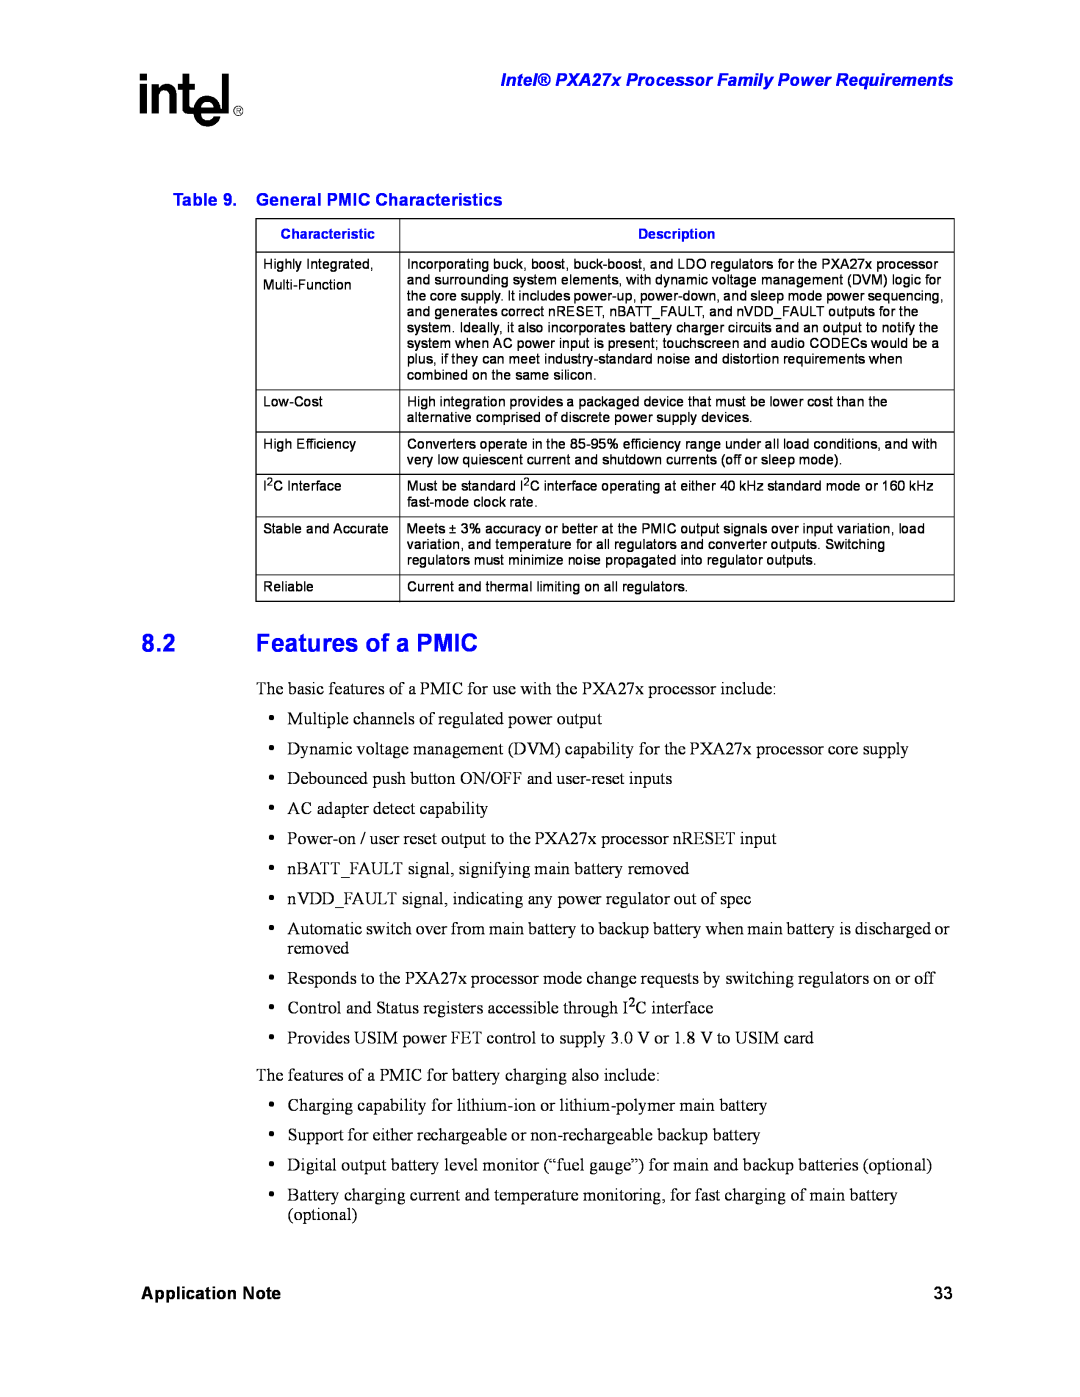 Intel PXA27X manual Features of a PMIC, General PMIC Characteristics, Intel PXA27x Processor Family Power Requirements 